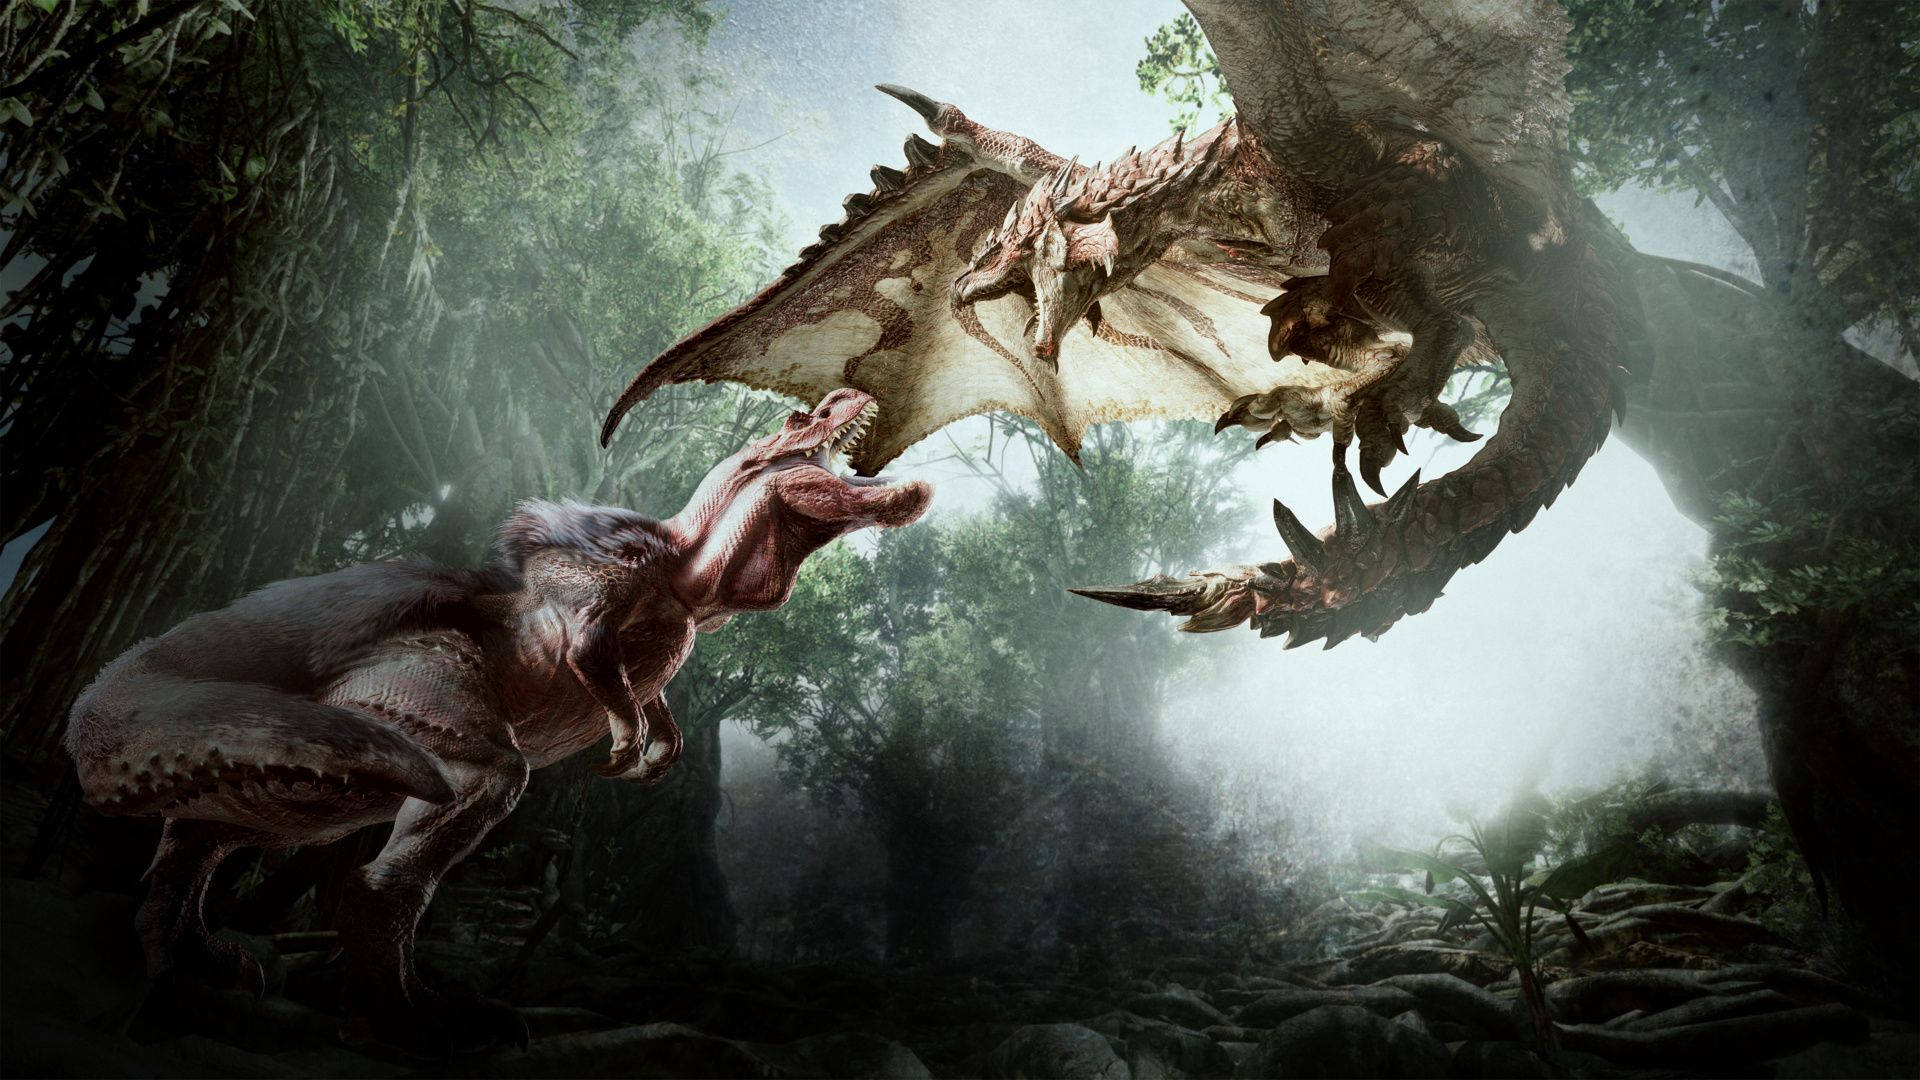 Hd Dinosaur And Dragon Artwork Background